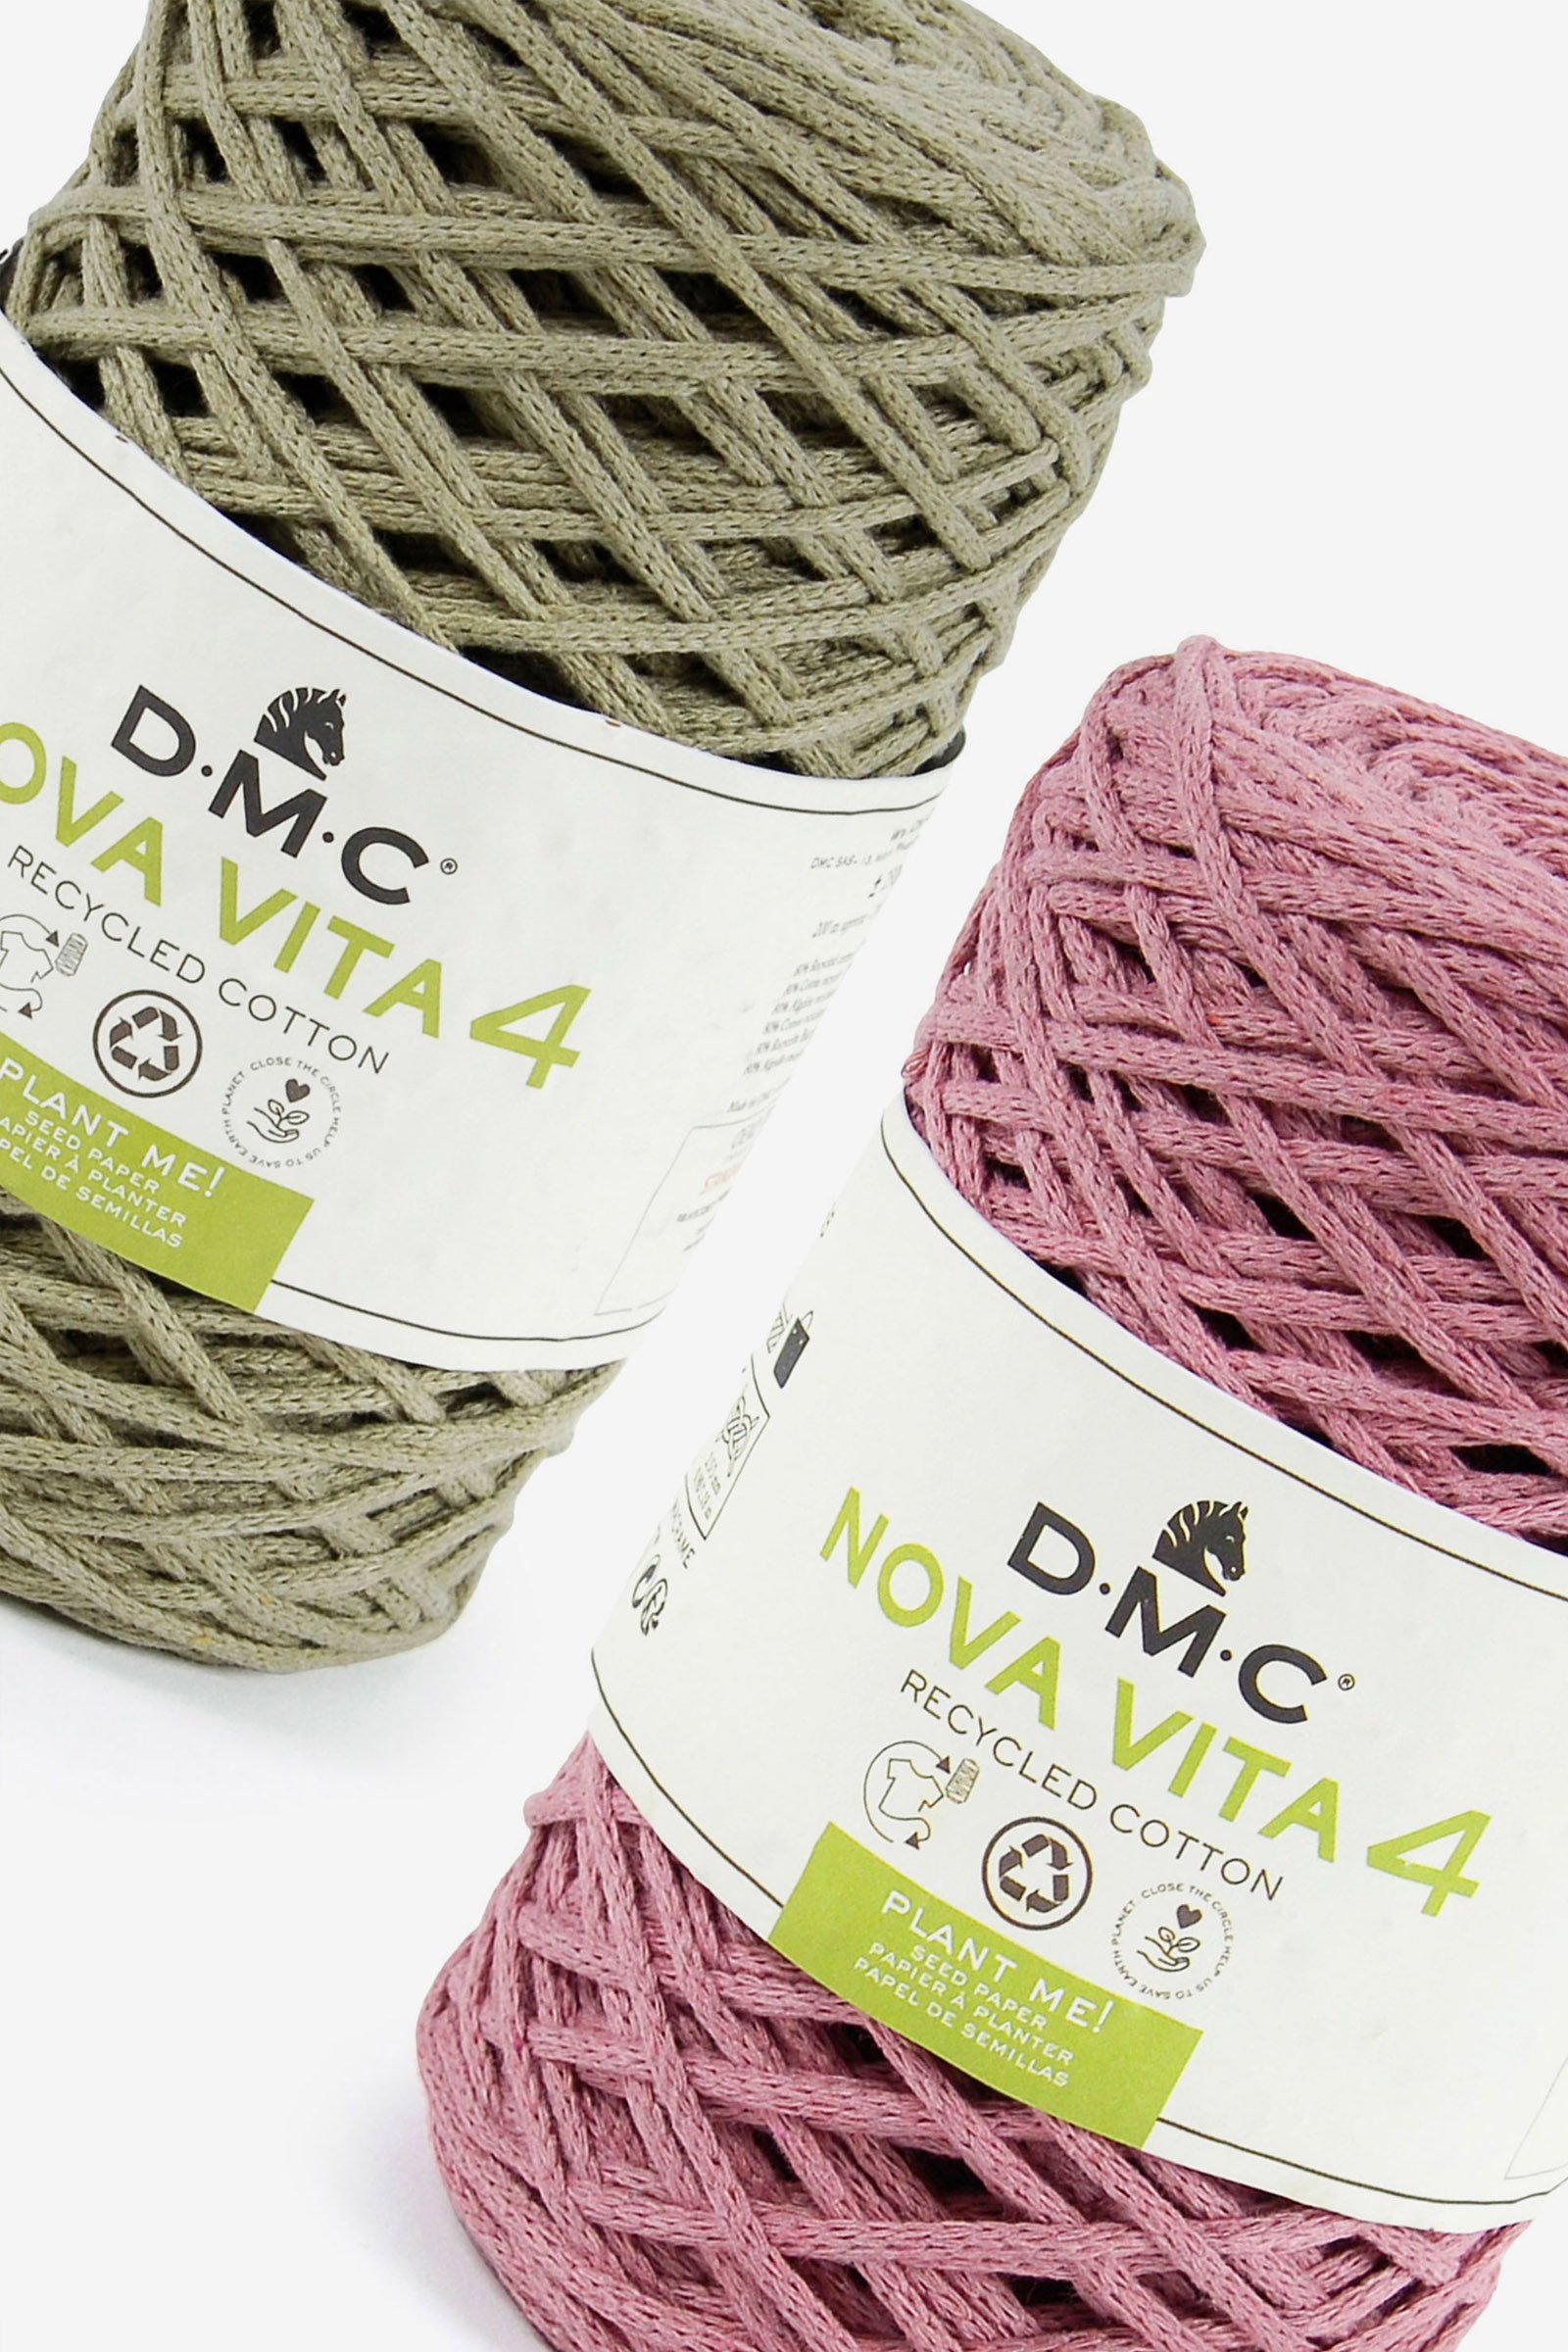 Nova Vita 4 - Crochet Knitting Macrame Yarn